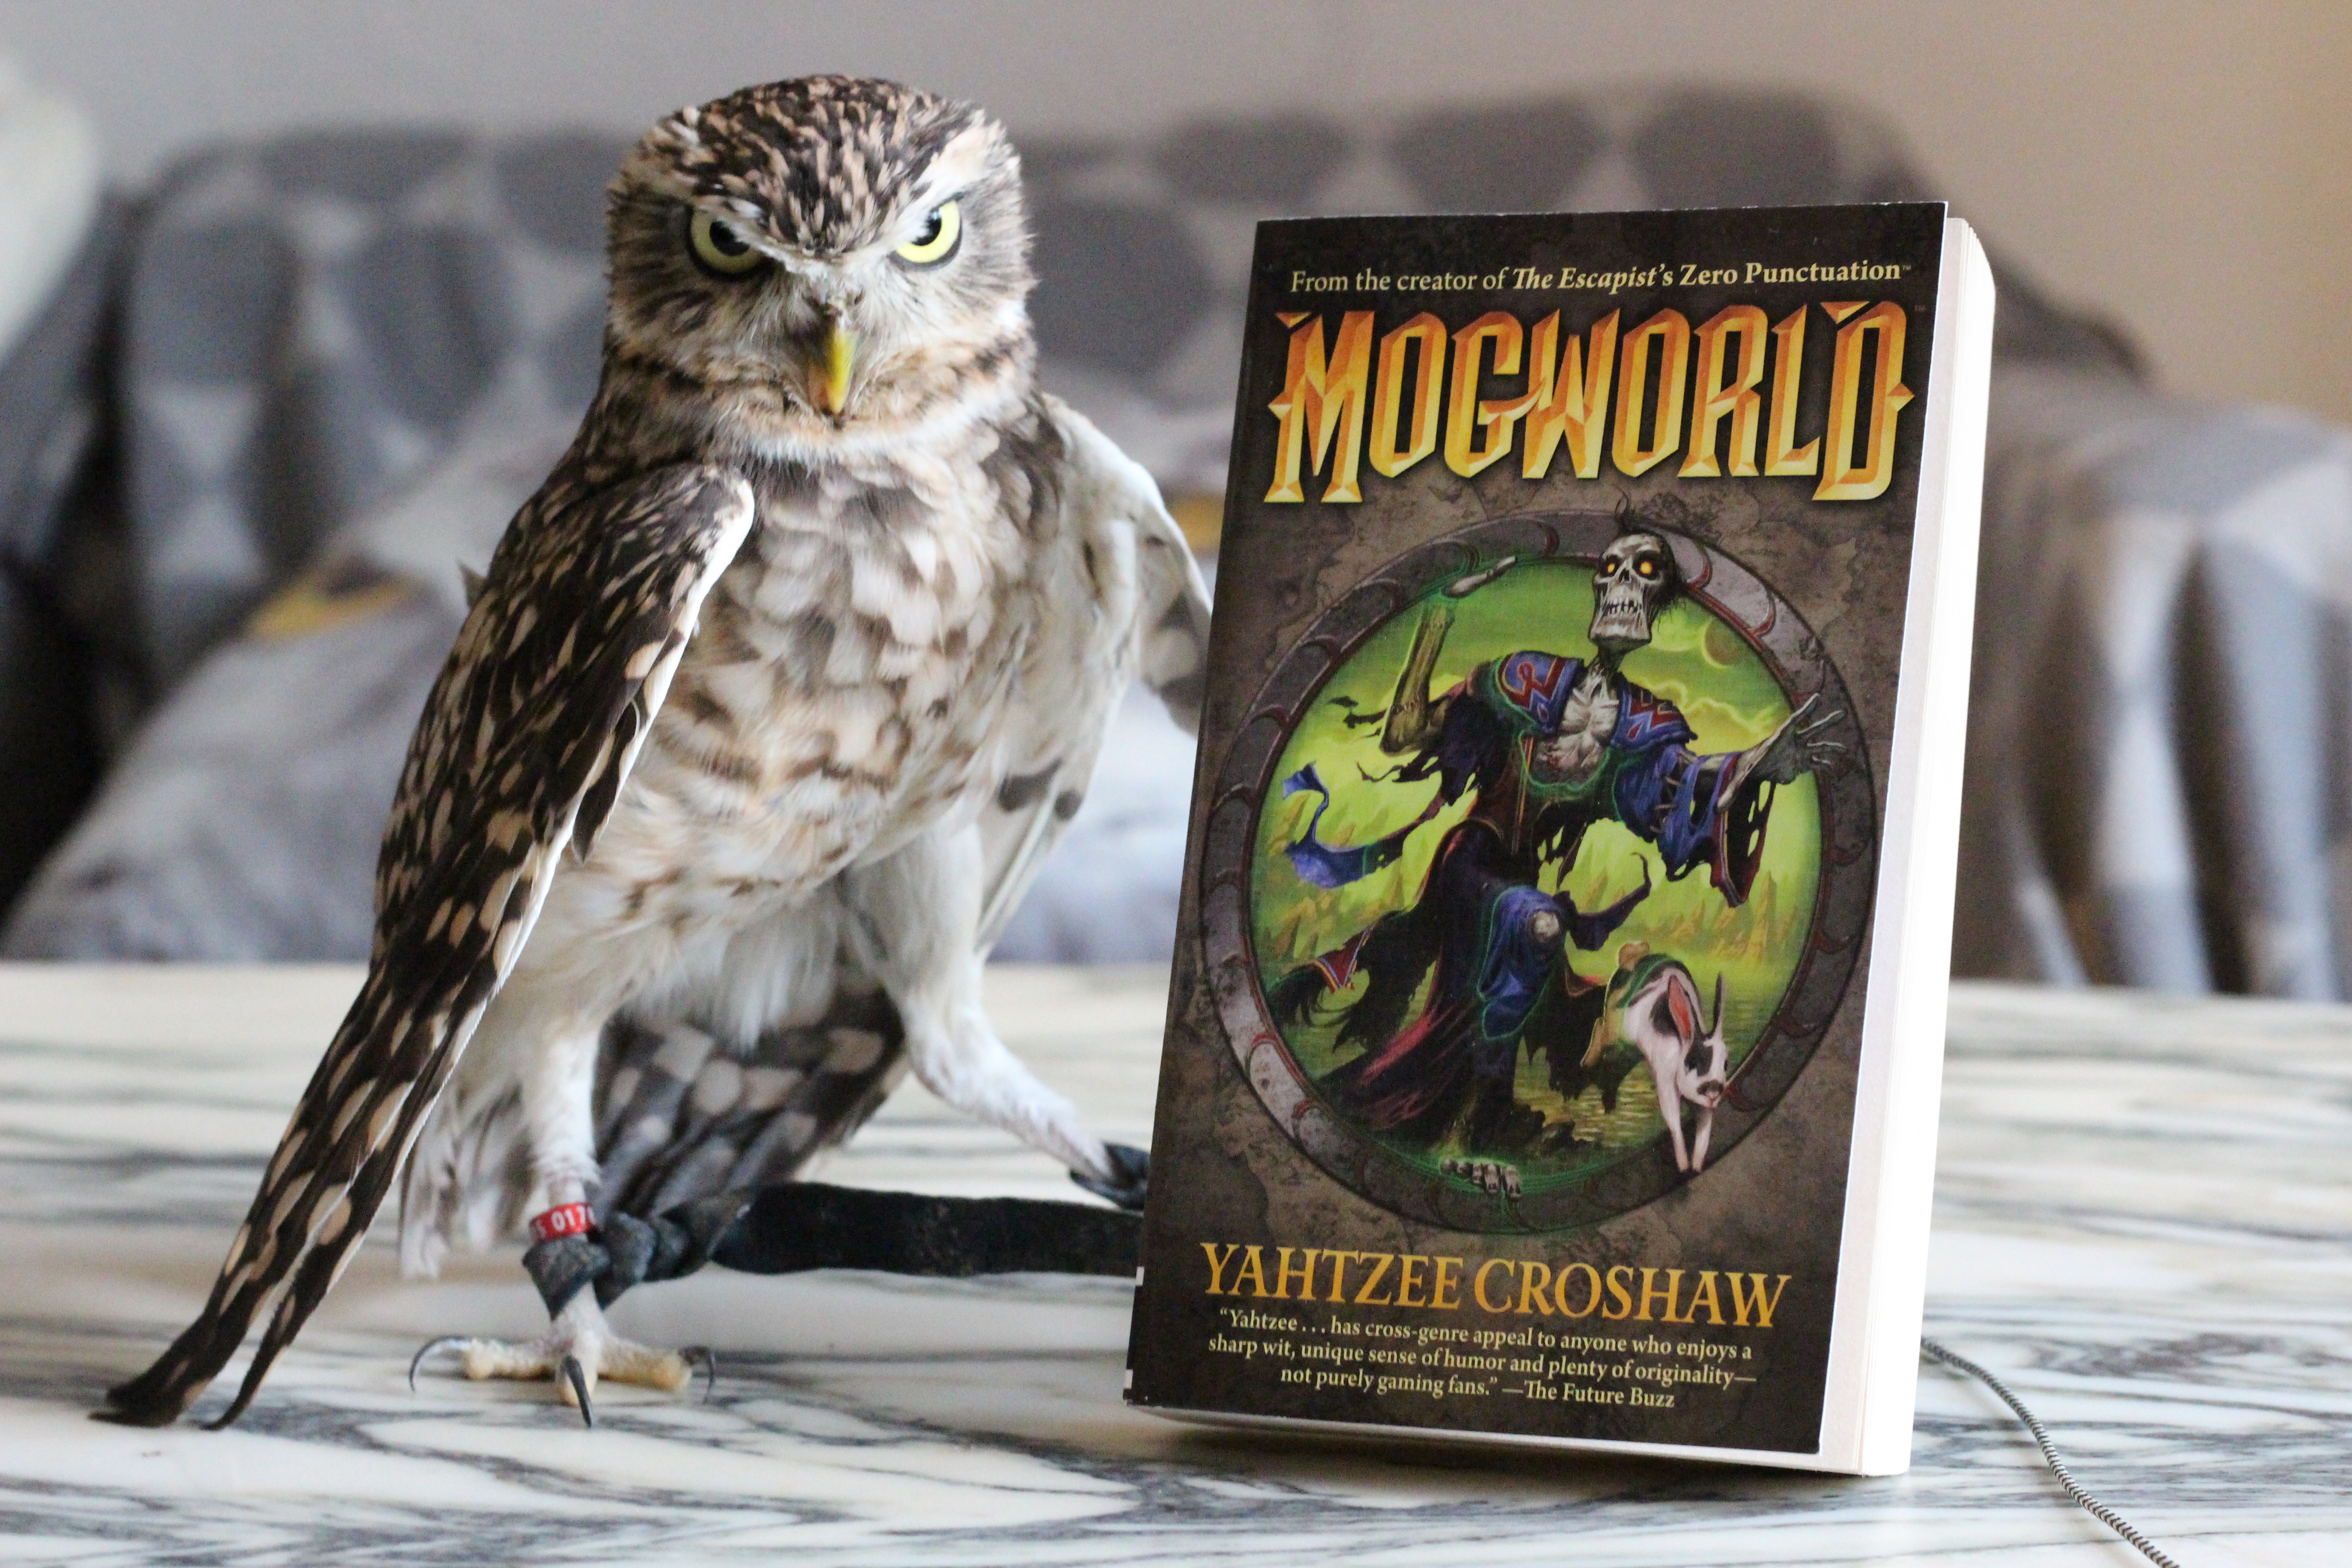 Mogworld Yahtzee Croshaw Owl